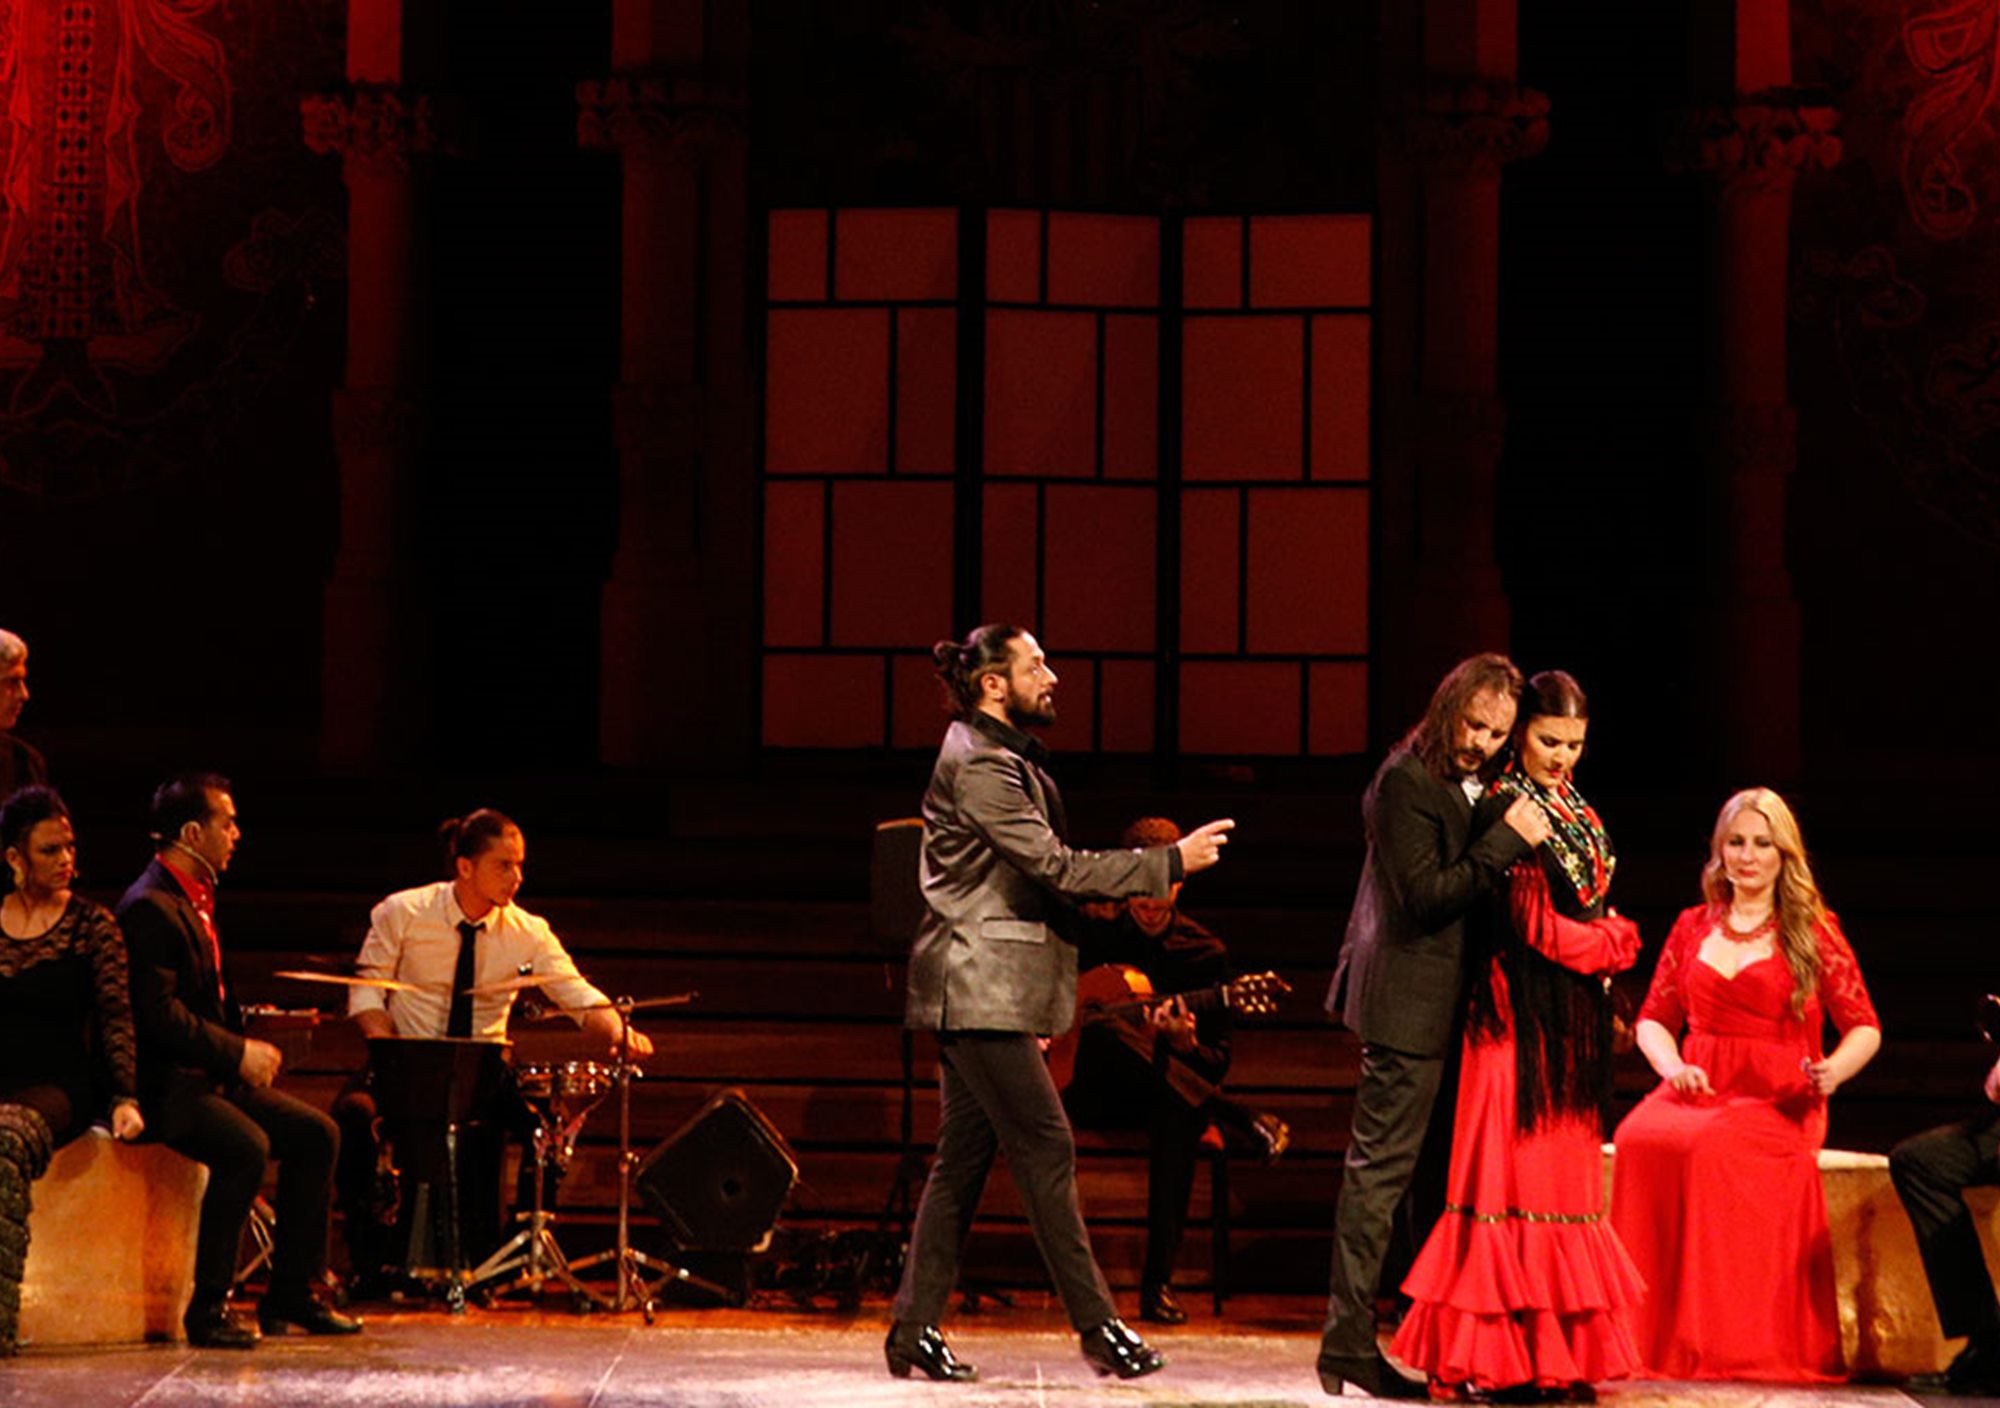 réserver visites guidées spectacle flamenco Teatre Poliorama barcelone billets visiter